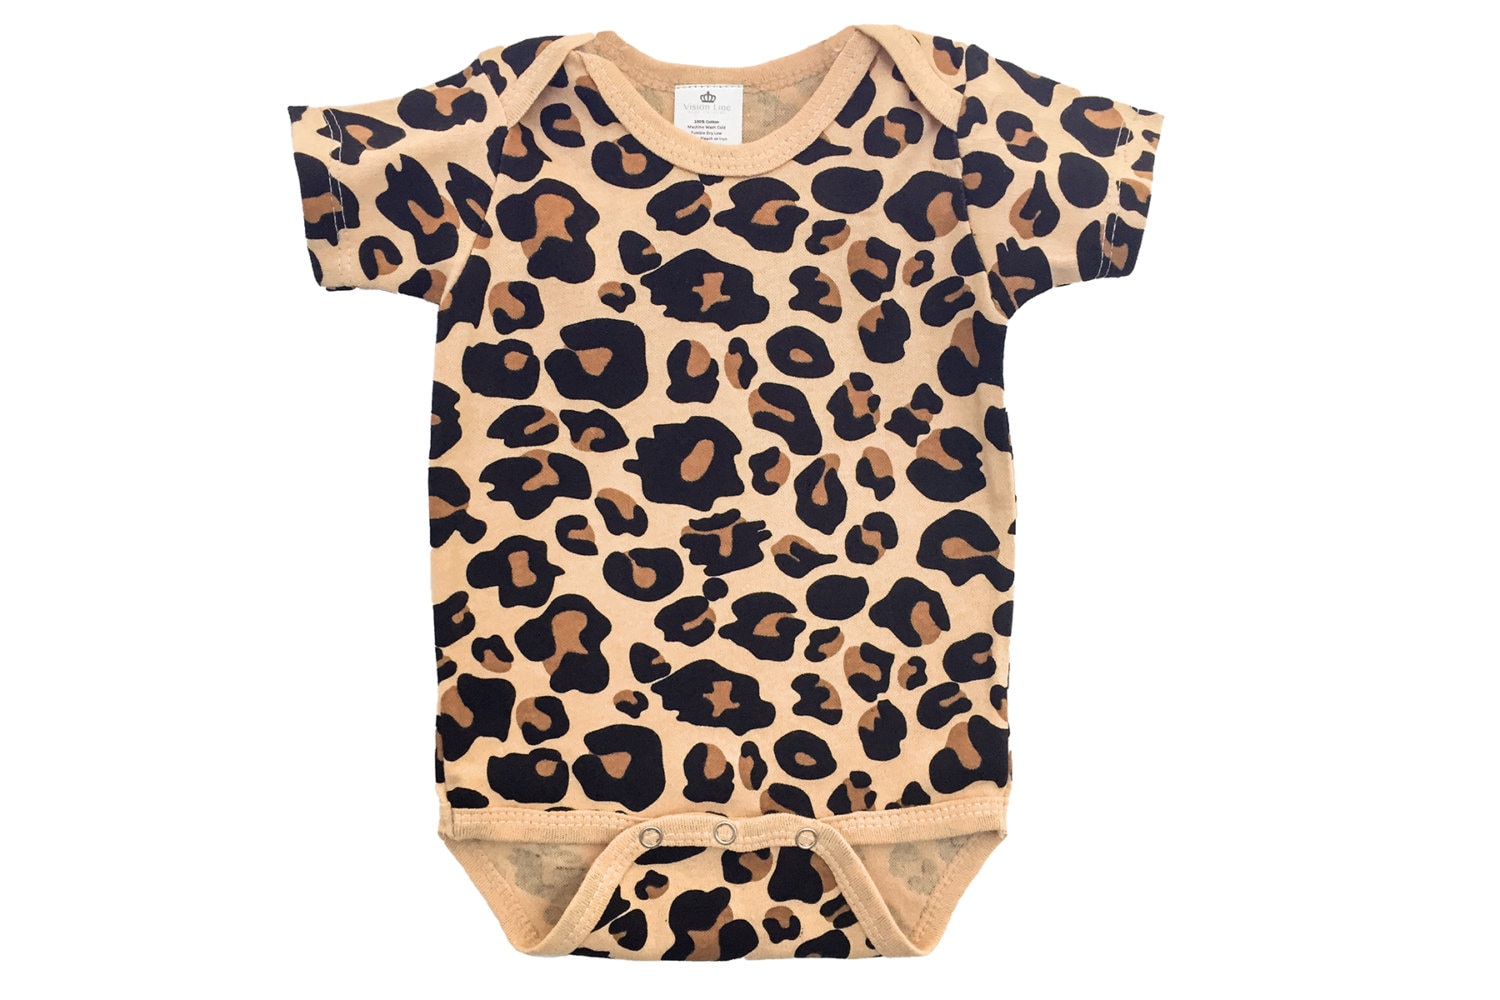 Leopard Print Baby Onesie: Tan Leopard Print by VisionLine on Etsy